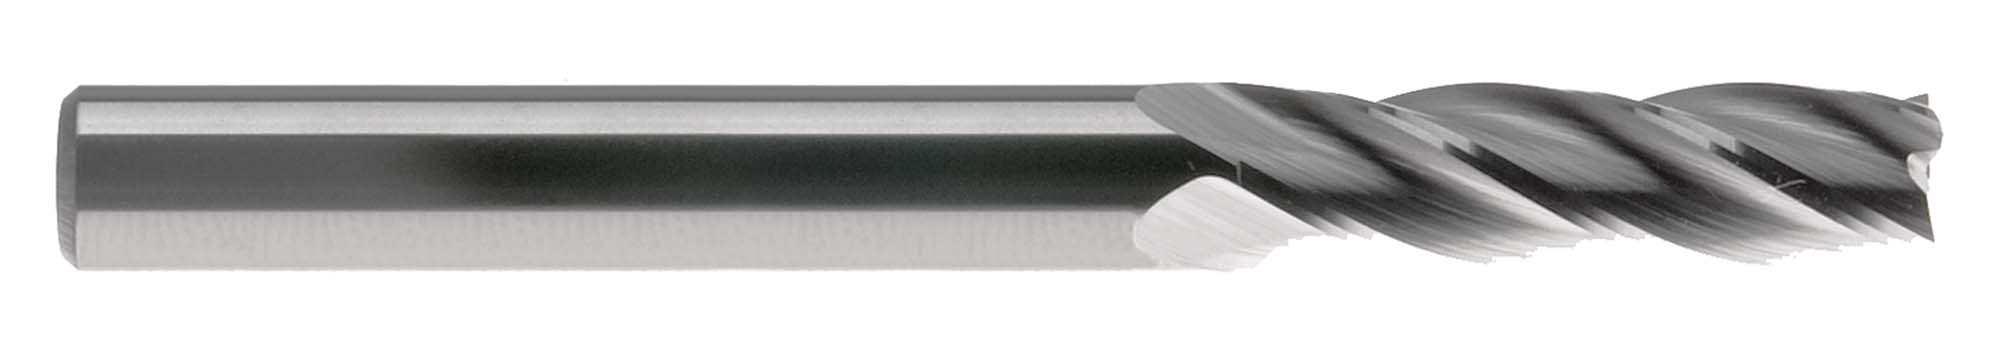 E710-1/4 1/4" 4 Flute Long USA Solid Micrograin Carbide End Mill